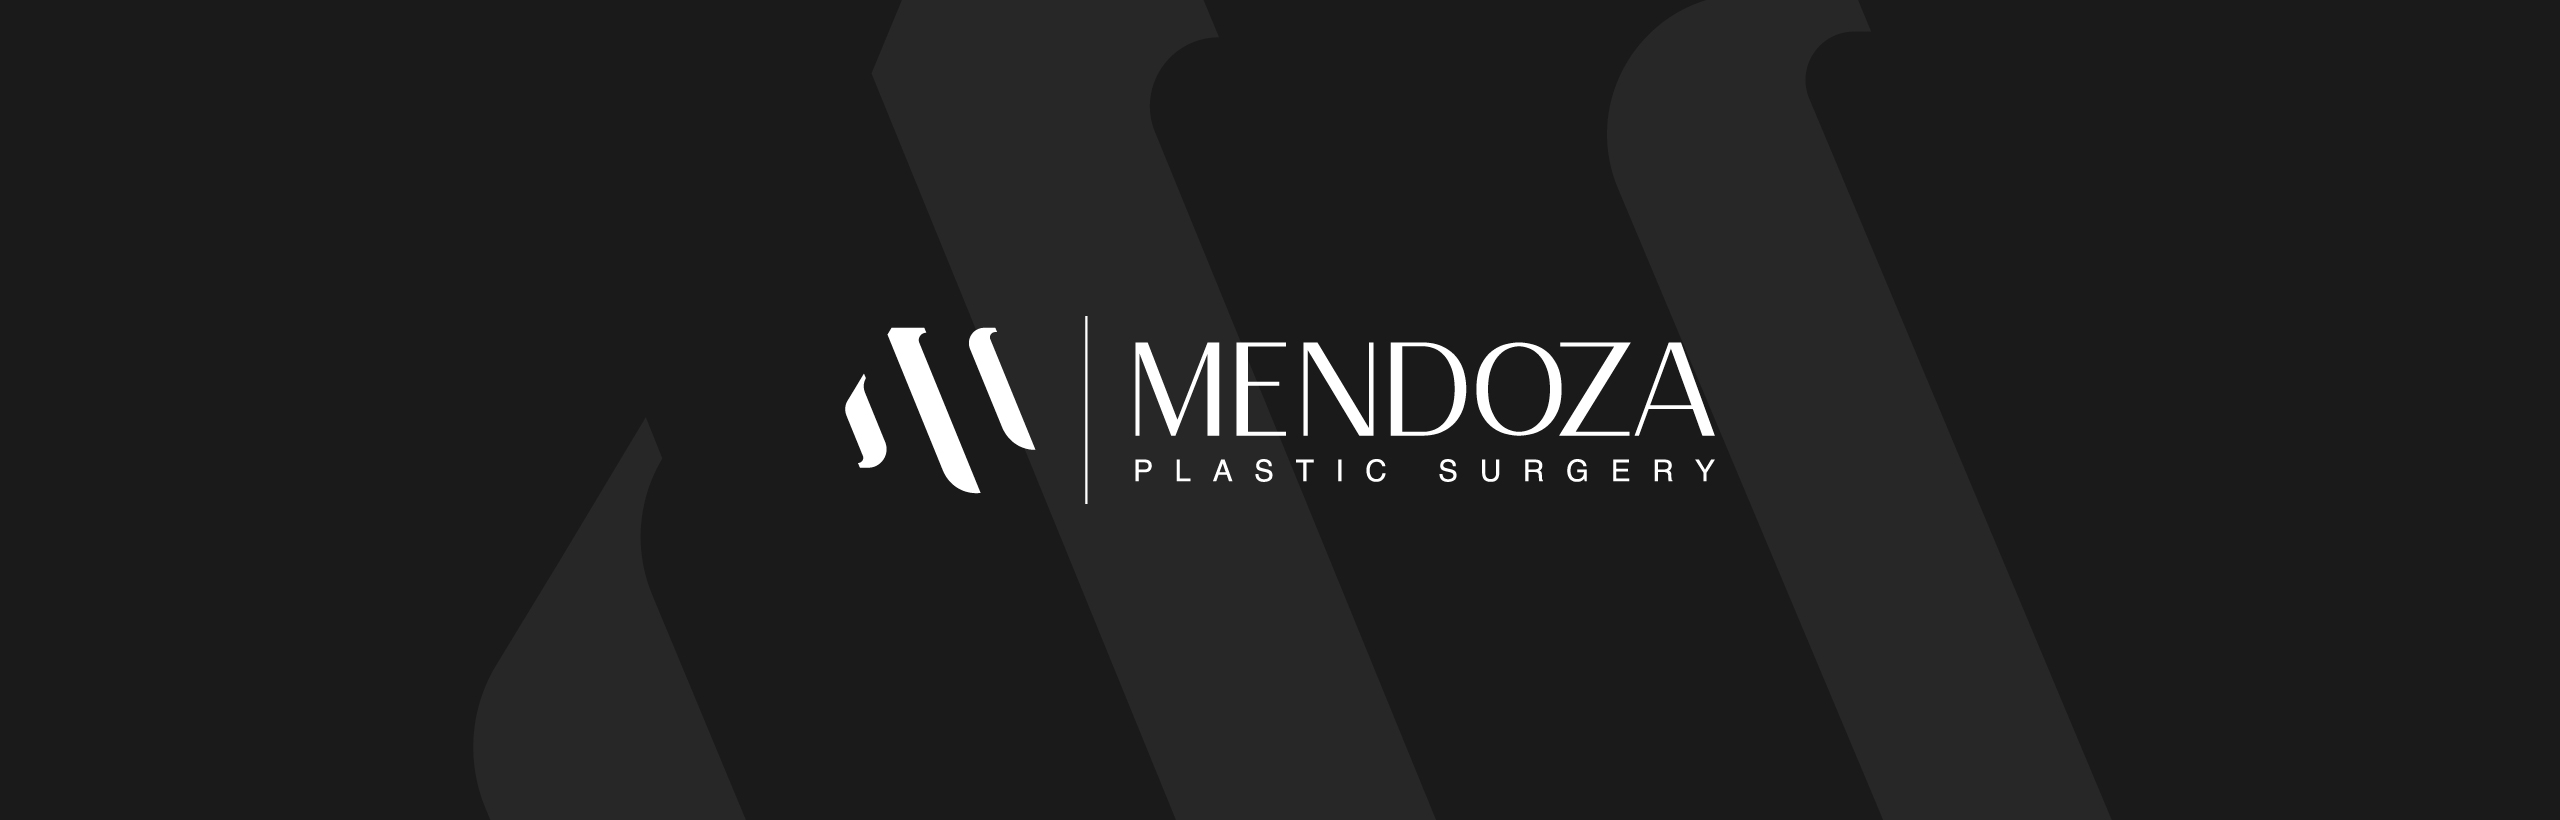 Mendoza Plastic Surgery